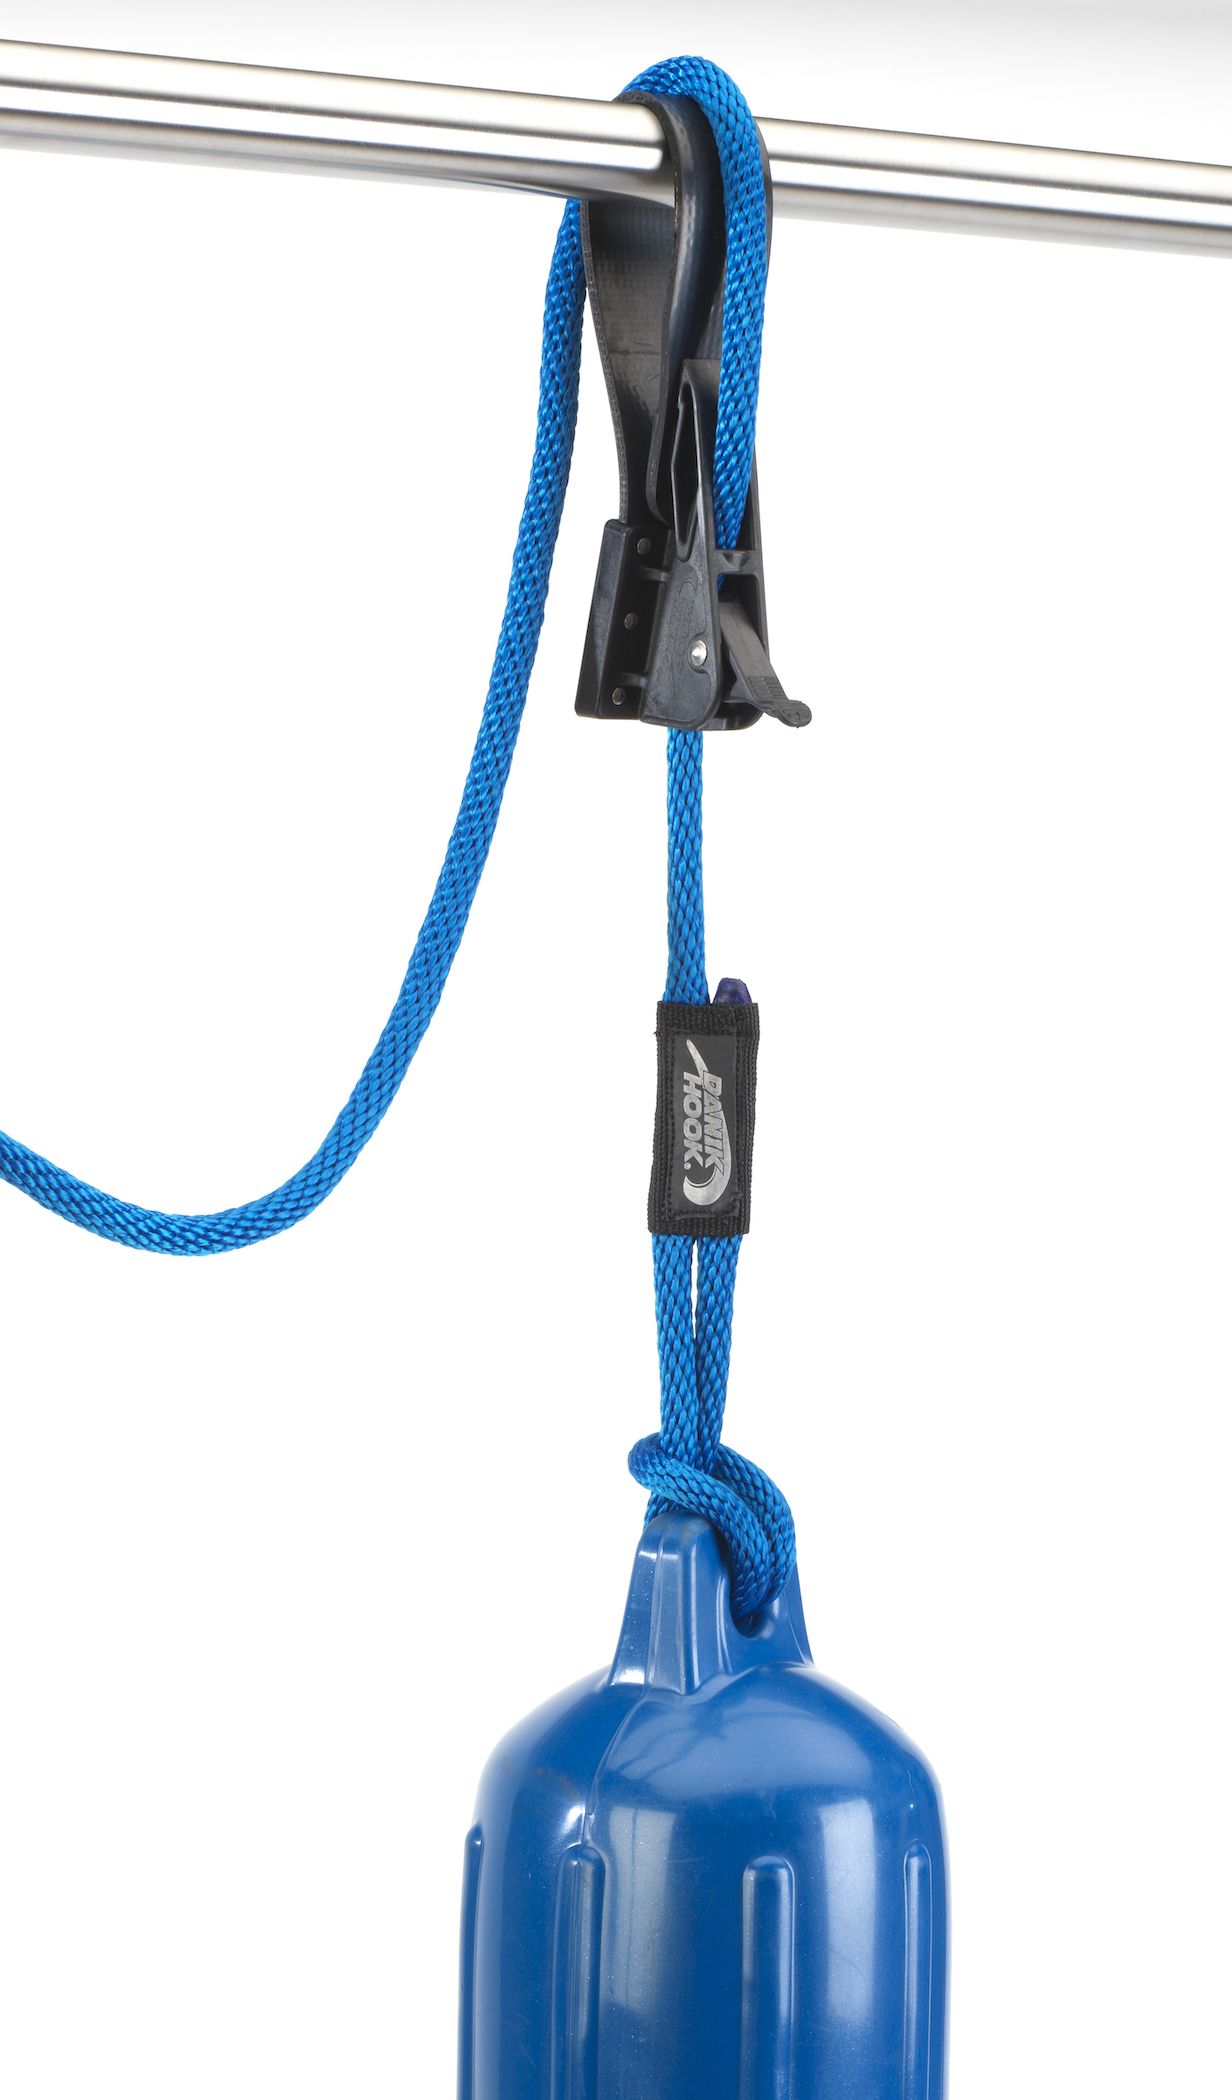 Danik Hook Unveils its Innovative New Adjustable Bungee Cord - Danik Hook